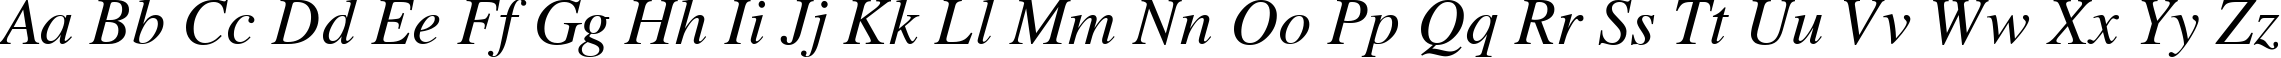 Пример написания английского алфавита шрифтом Vremya Italic